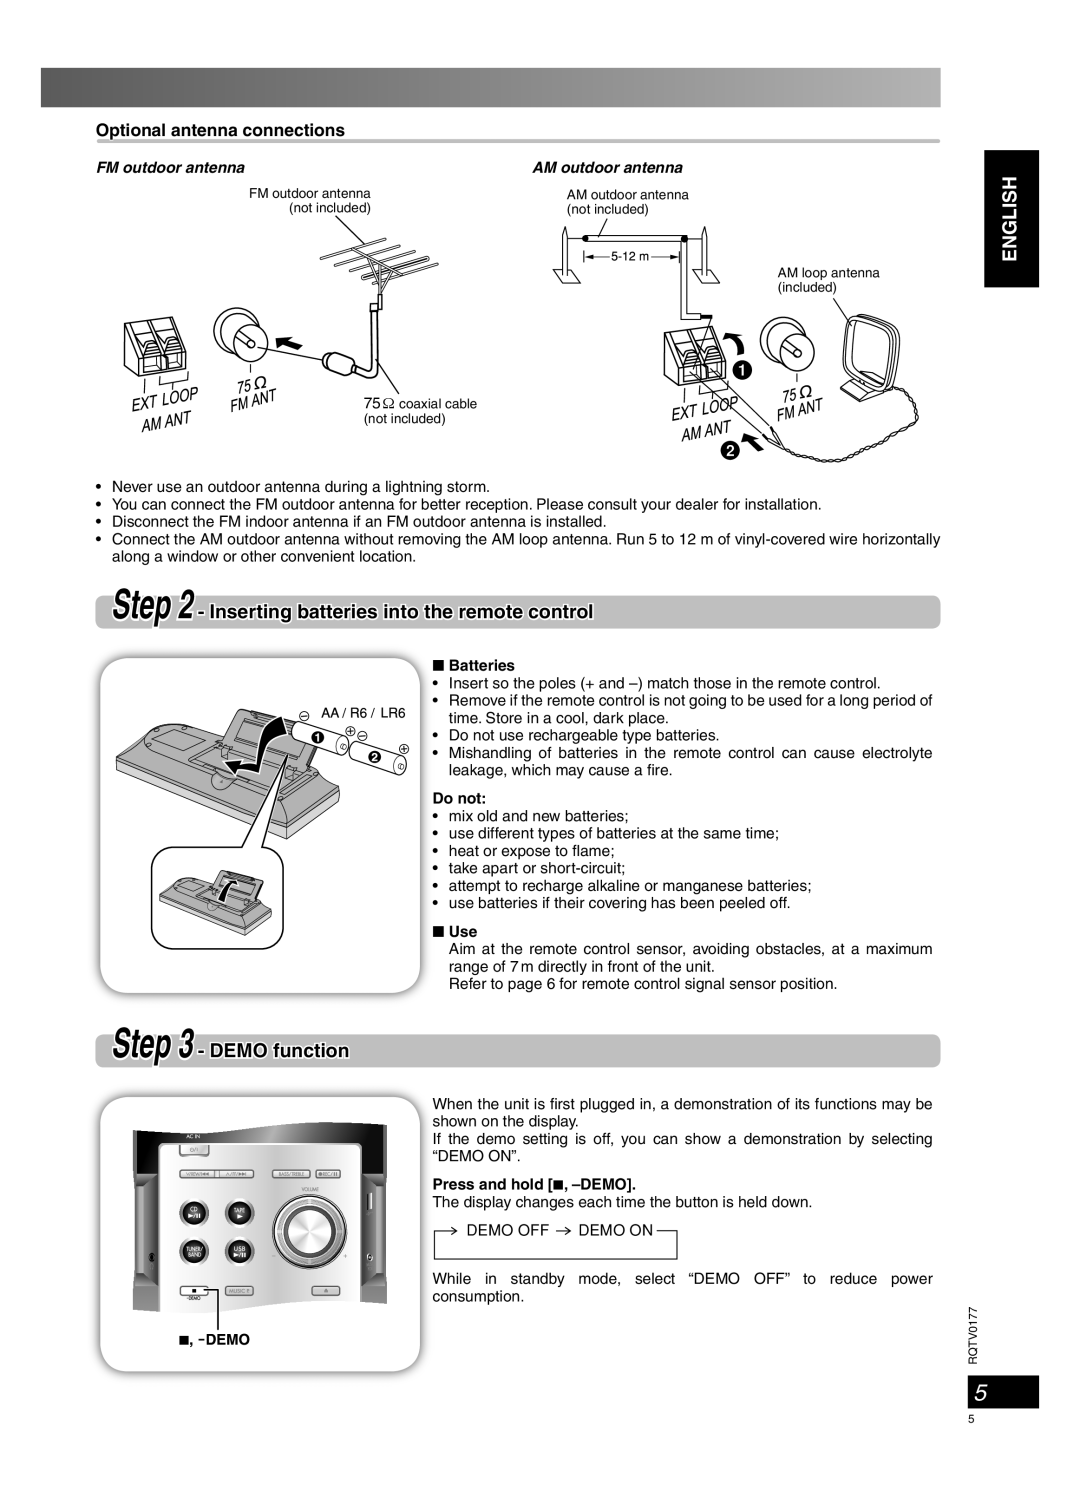 Panasonic SC-PM45 manual DEMO function, Optional antenna connections, English, AM outdoor antenna 